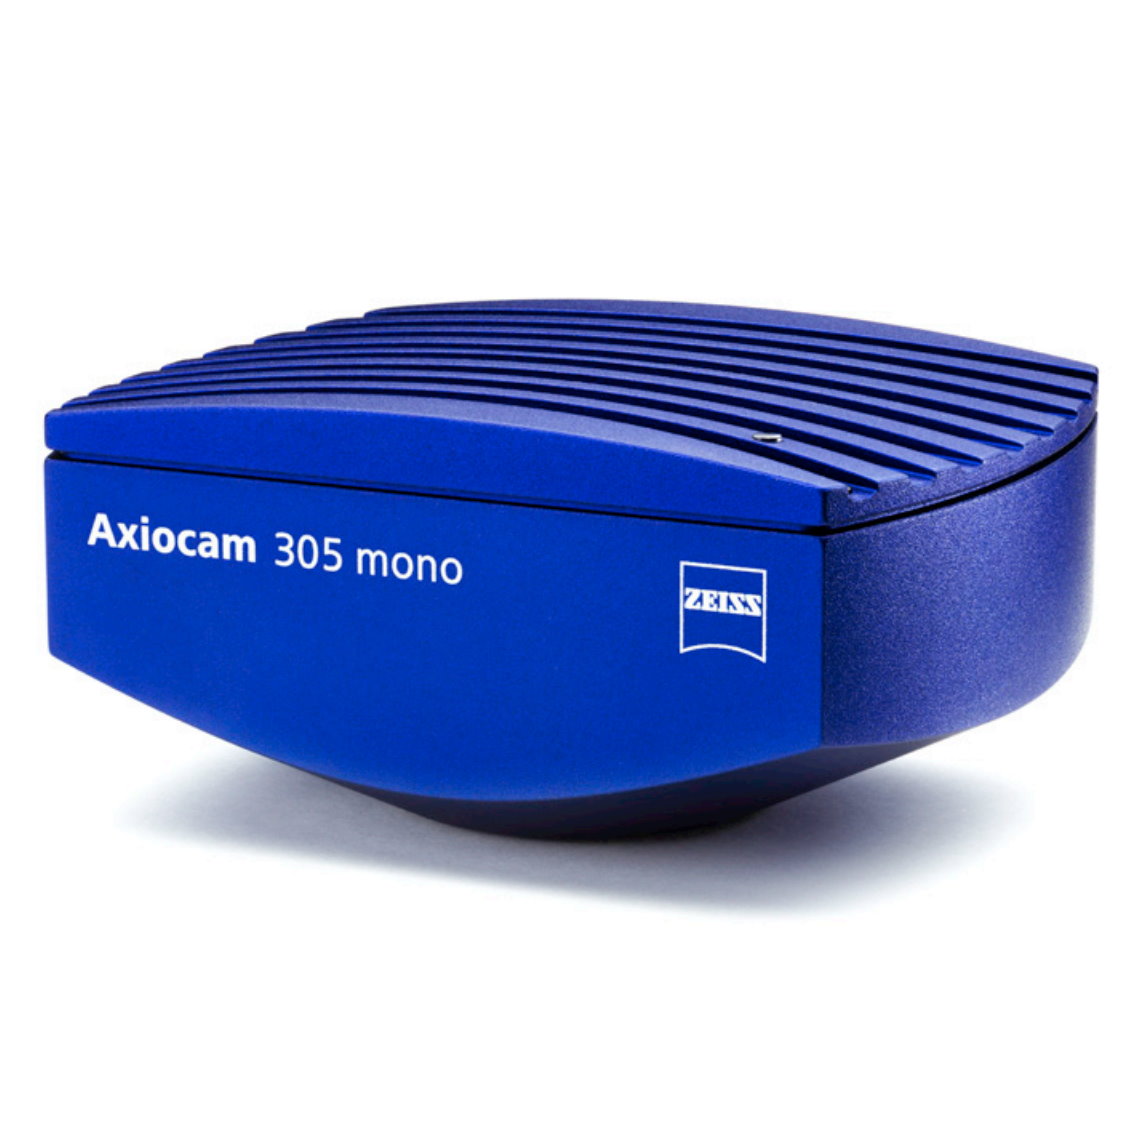 Microscopy Camera Axiocam 305 mono R2 (D)